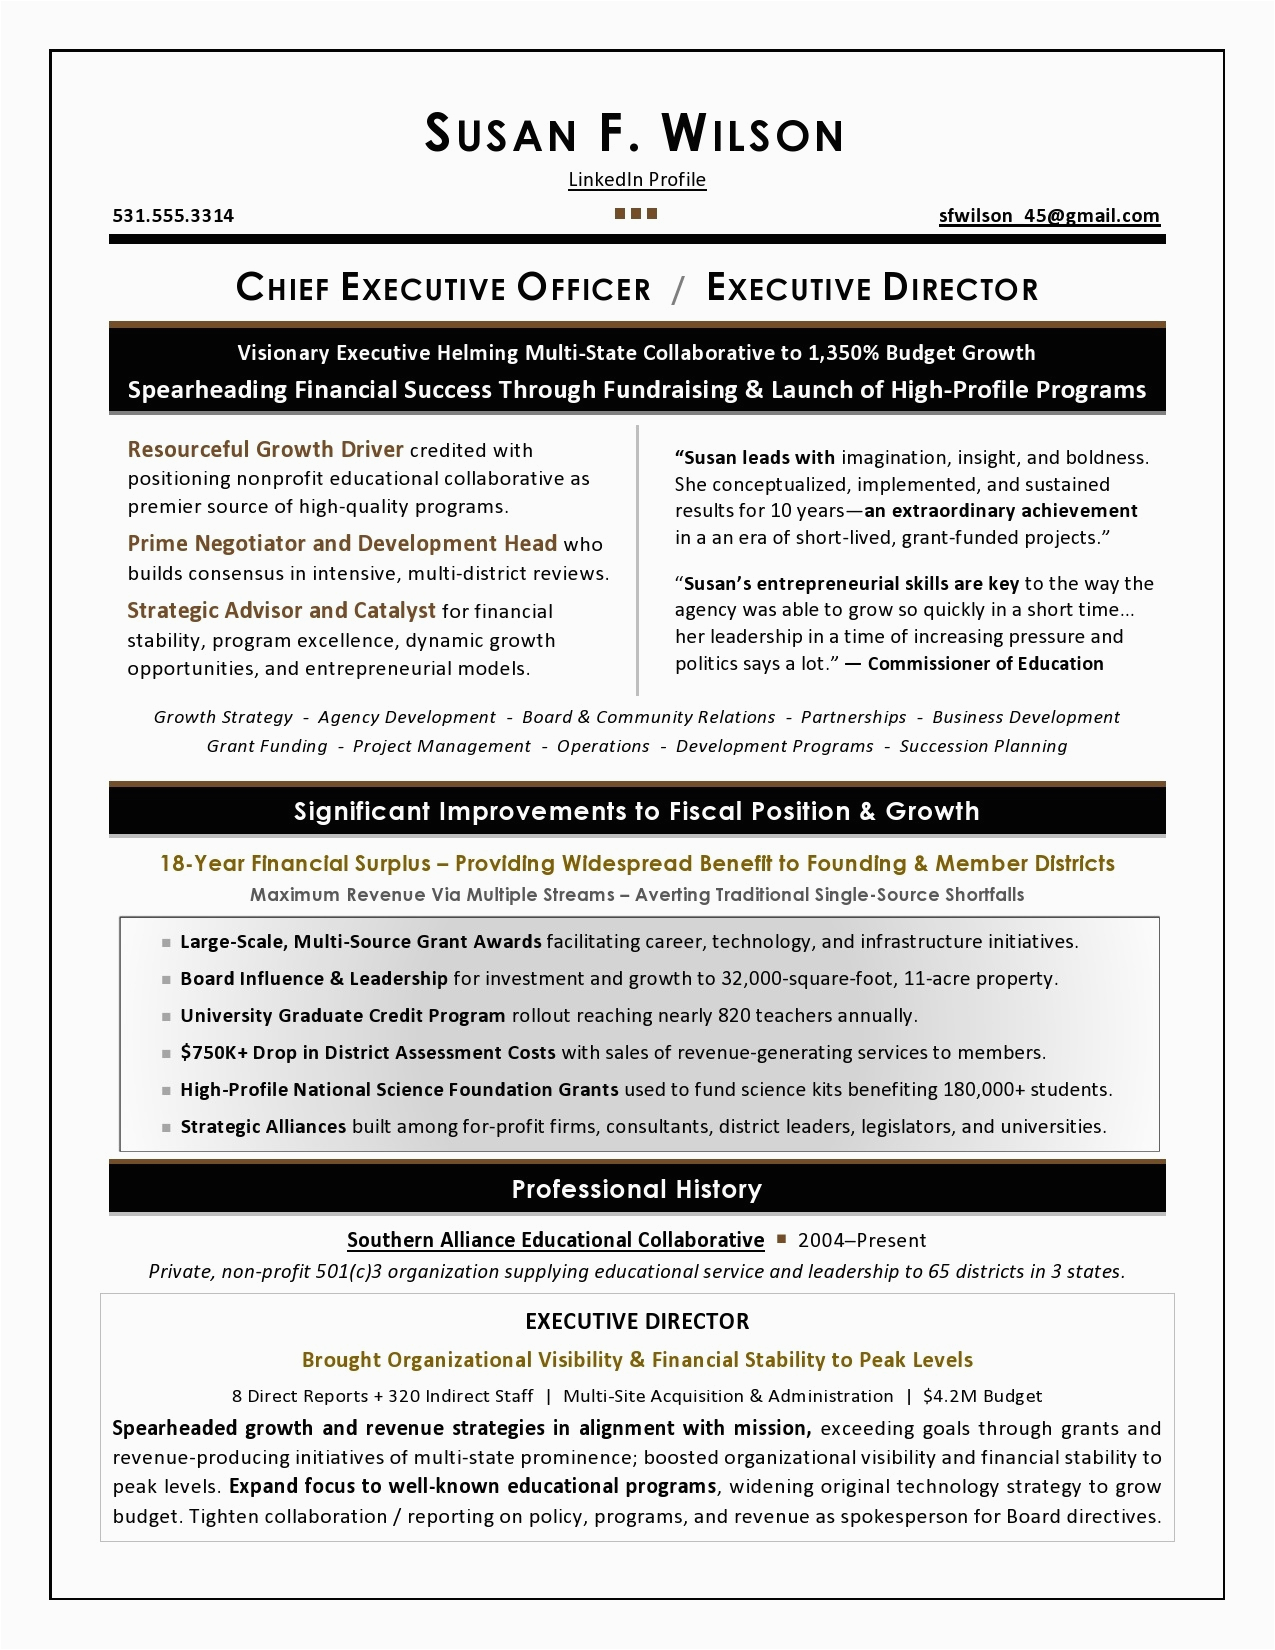 Sample Resume for Nonprofit Executive Director Executive Resume Samples